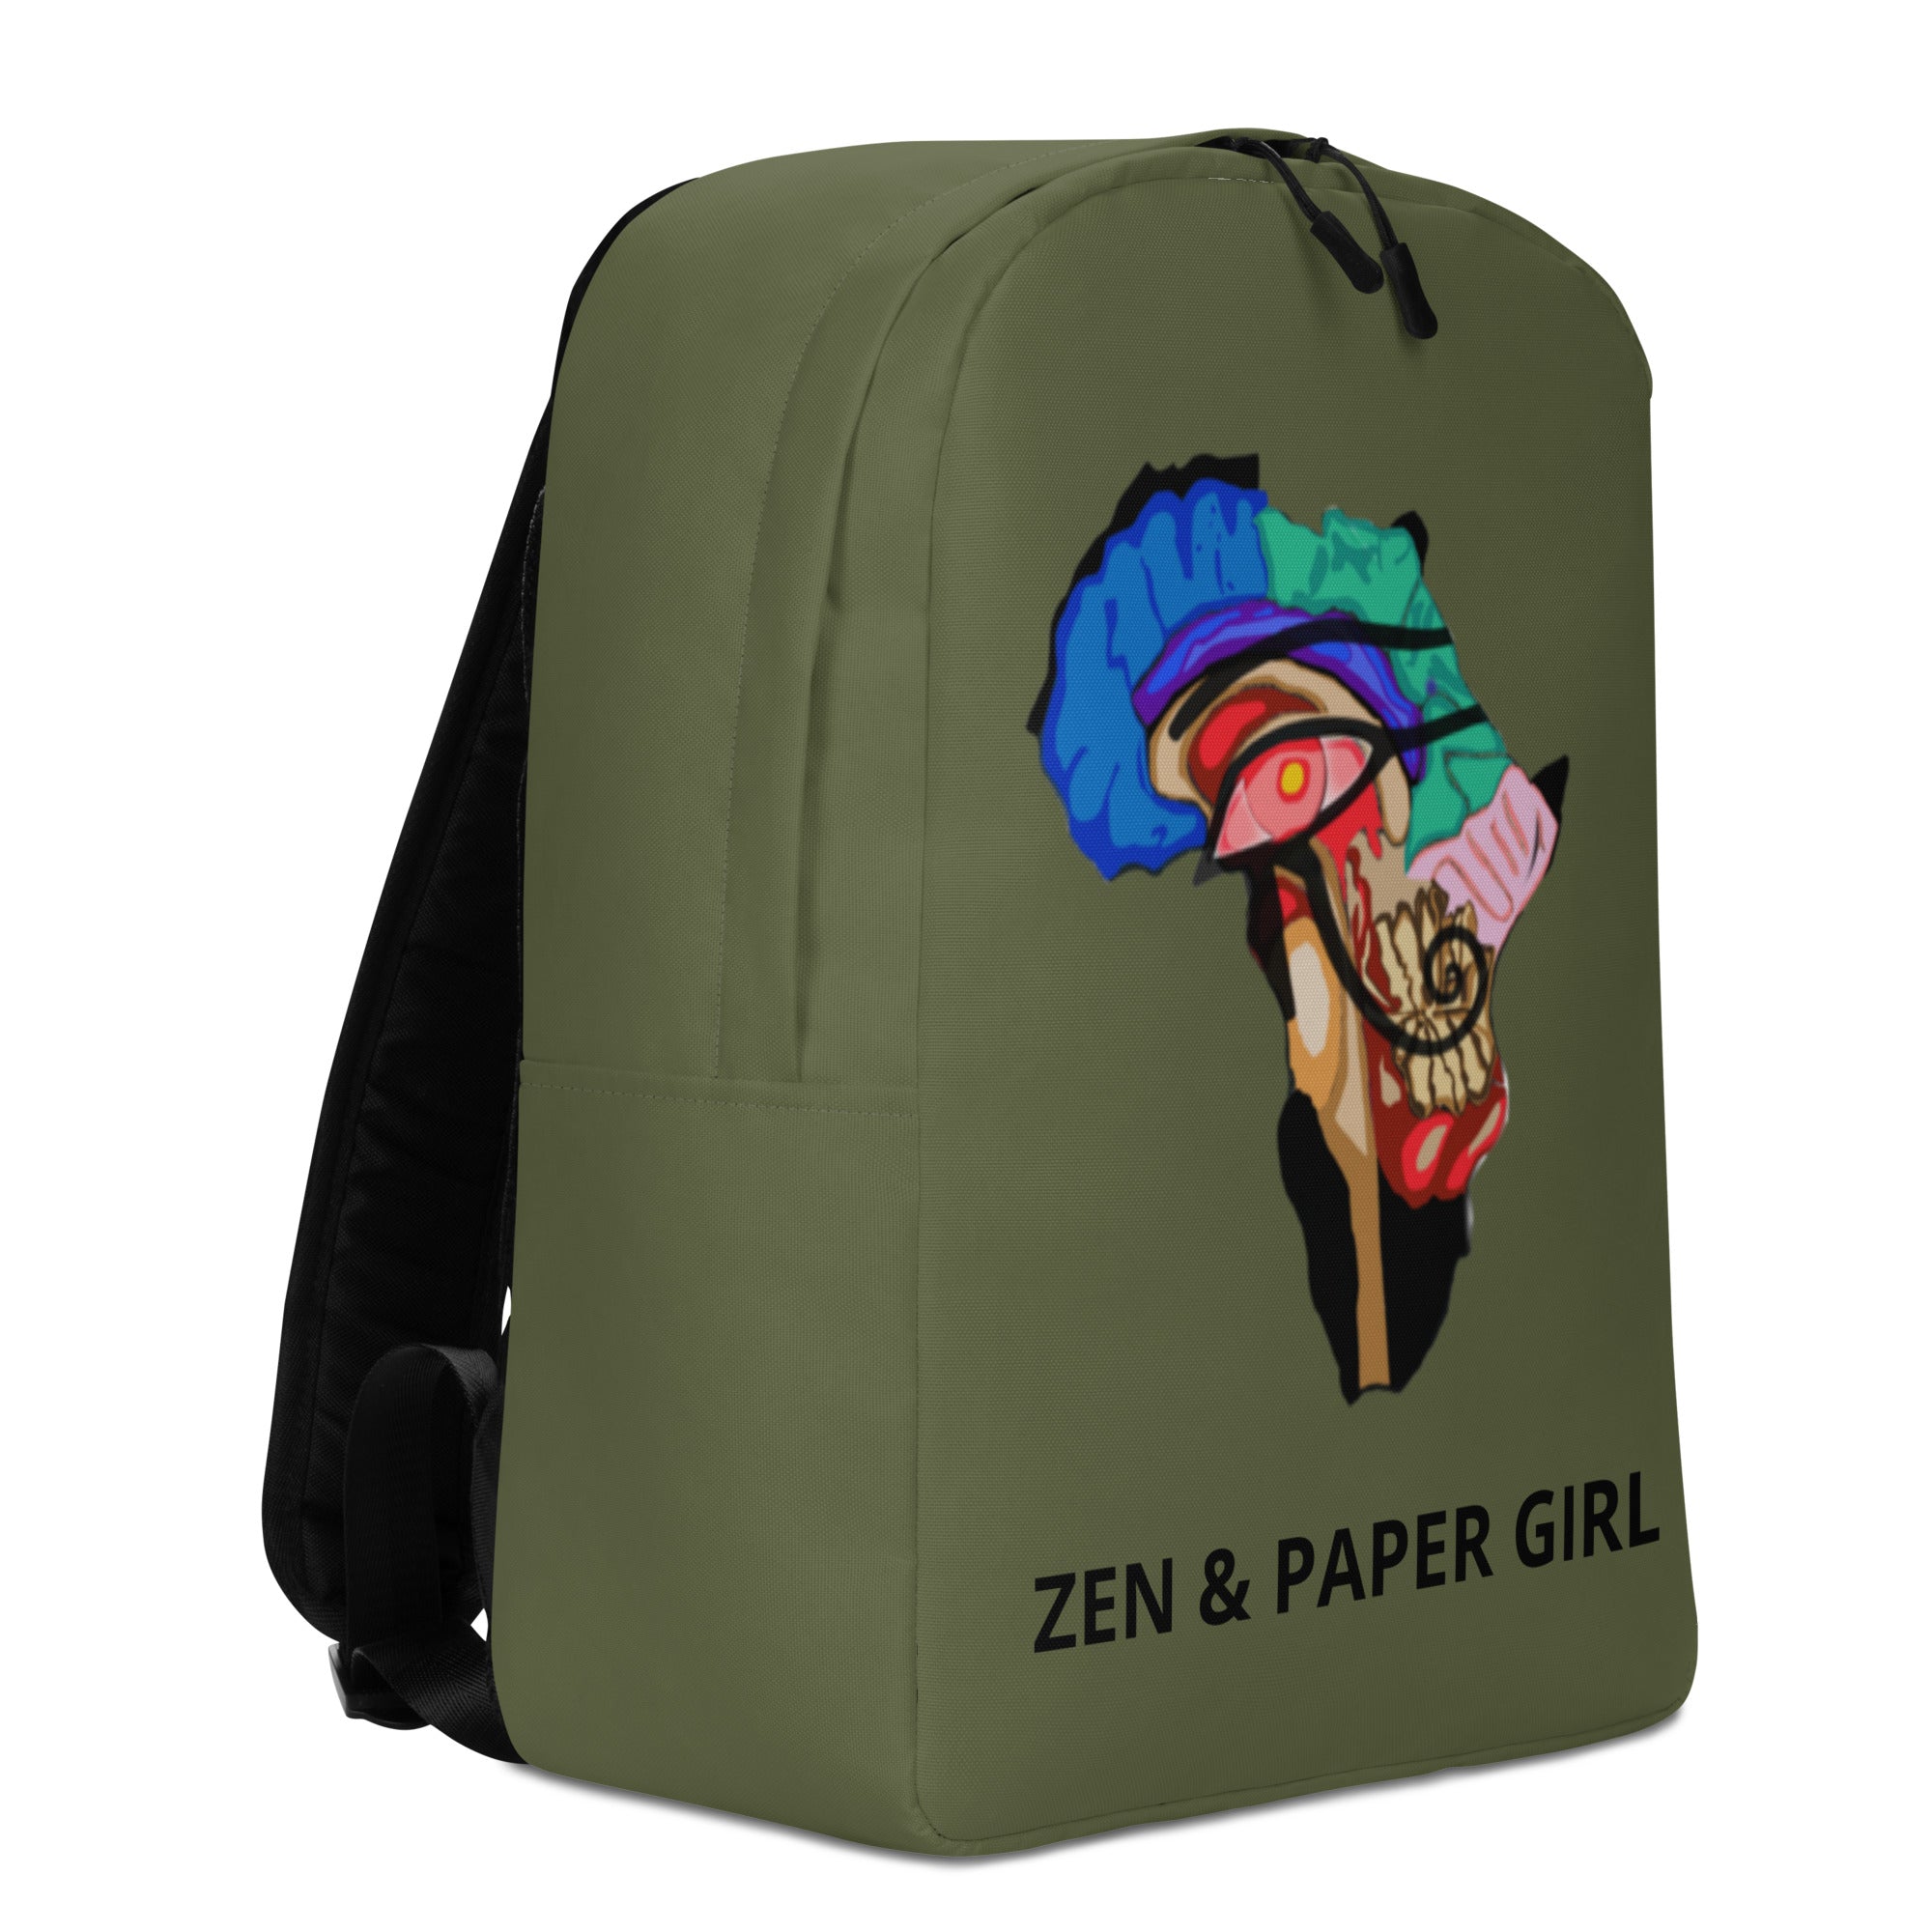 ZPG Africa On The Brain Backpack - Olive